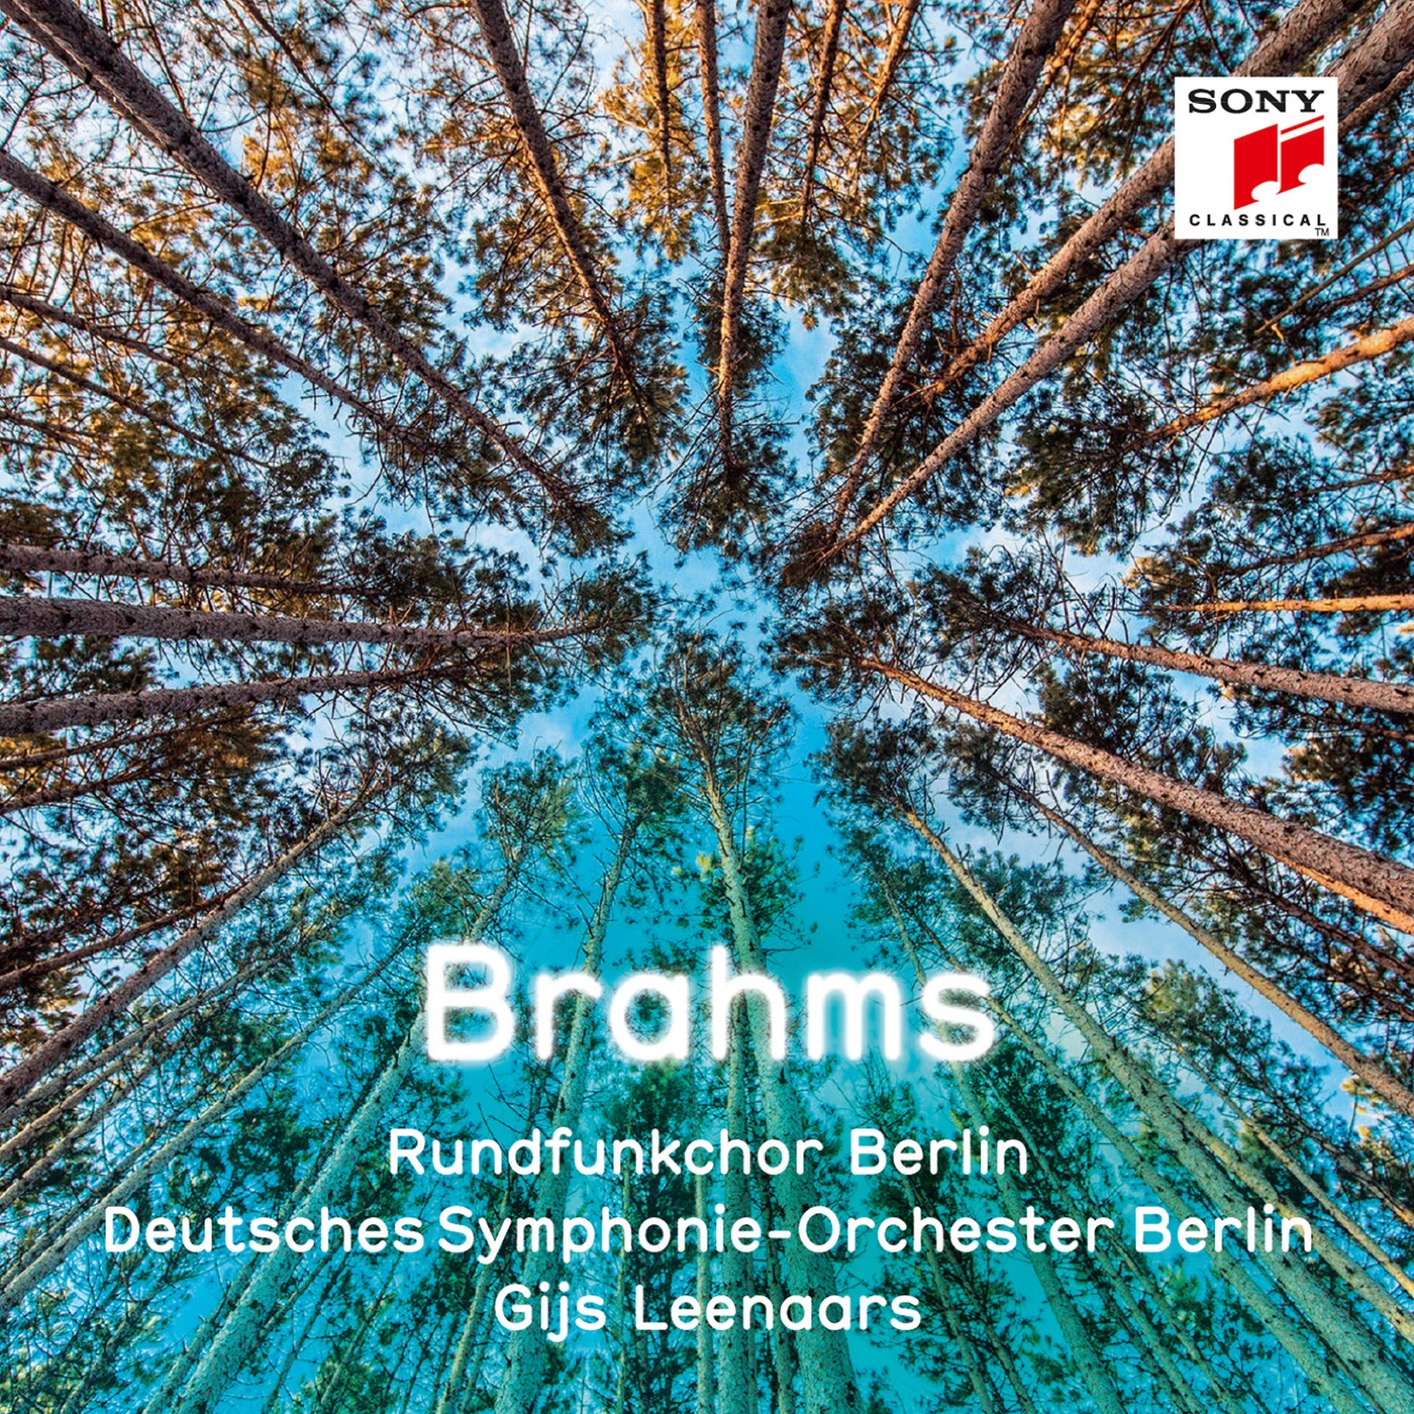 Rundfunkchor Berlin – Brahms (2019) [FLAC 24bit/48kHz]